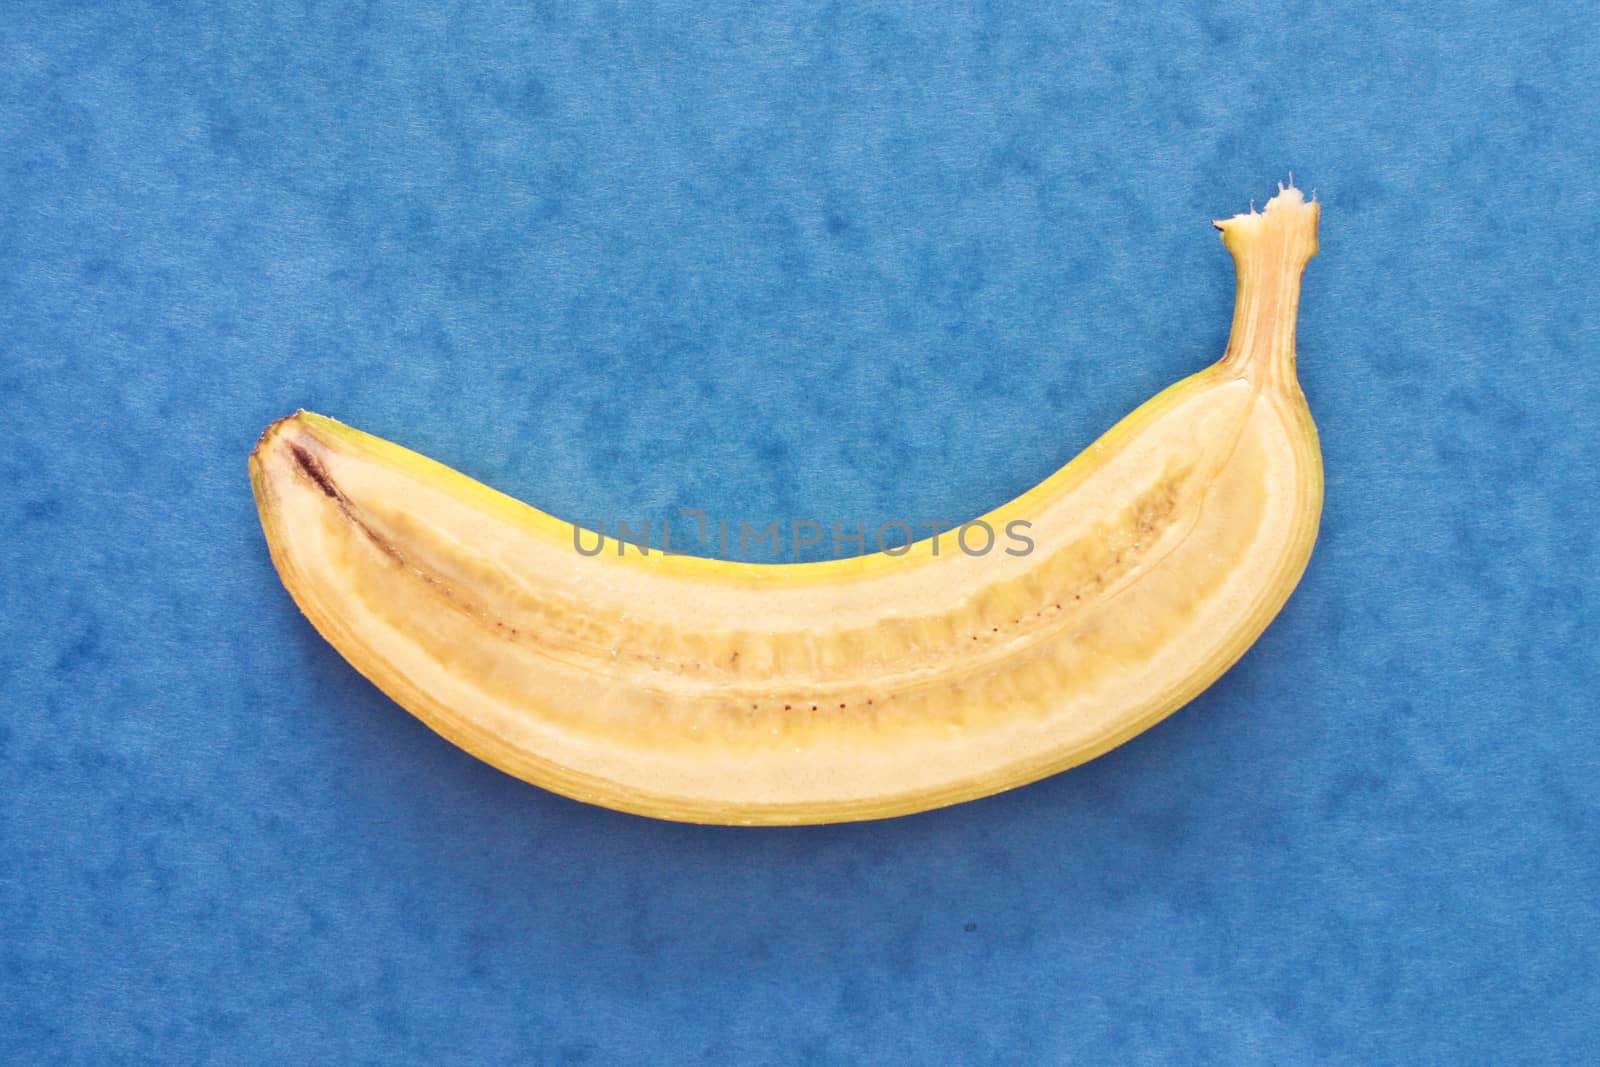 Slice of a fresh banana on a blue background